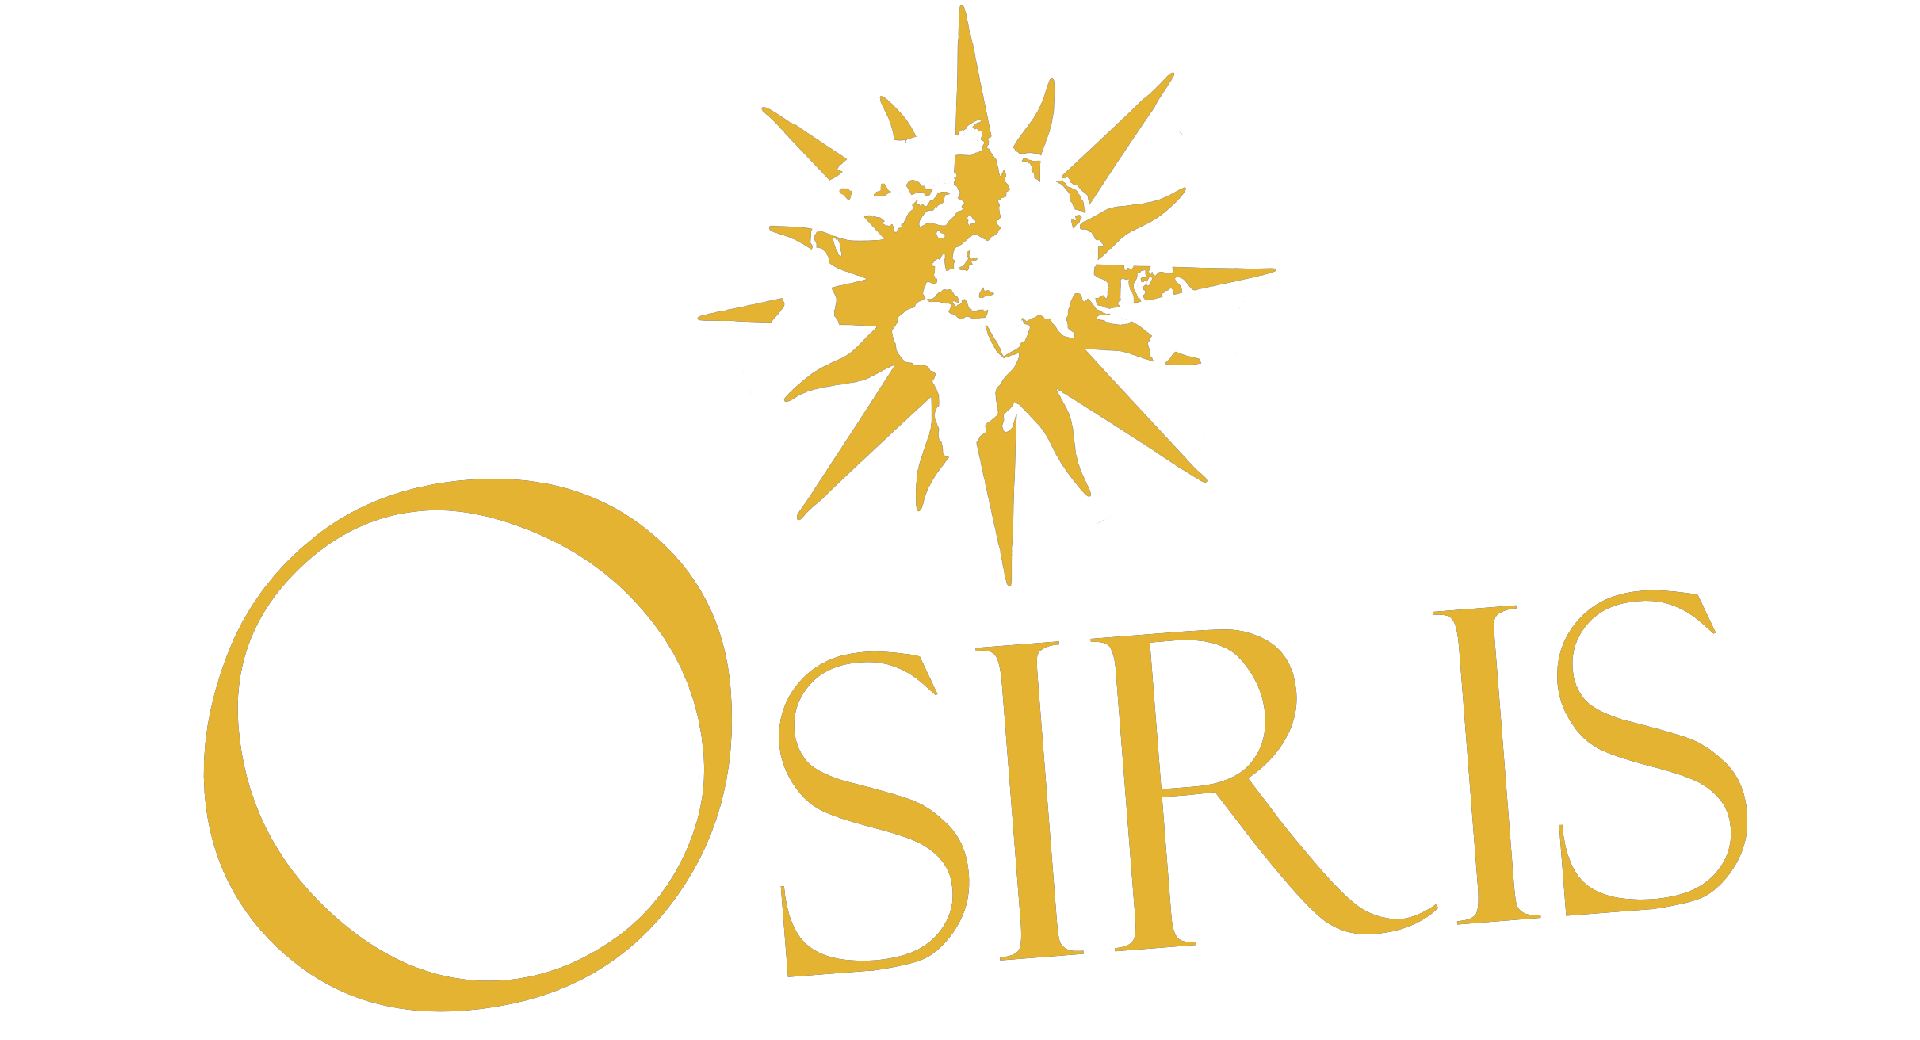 logo Osiris